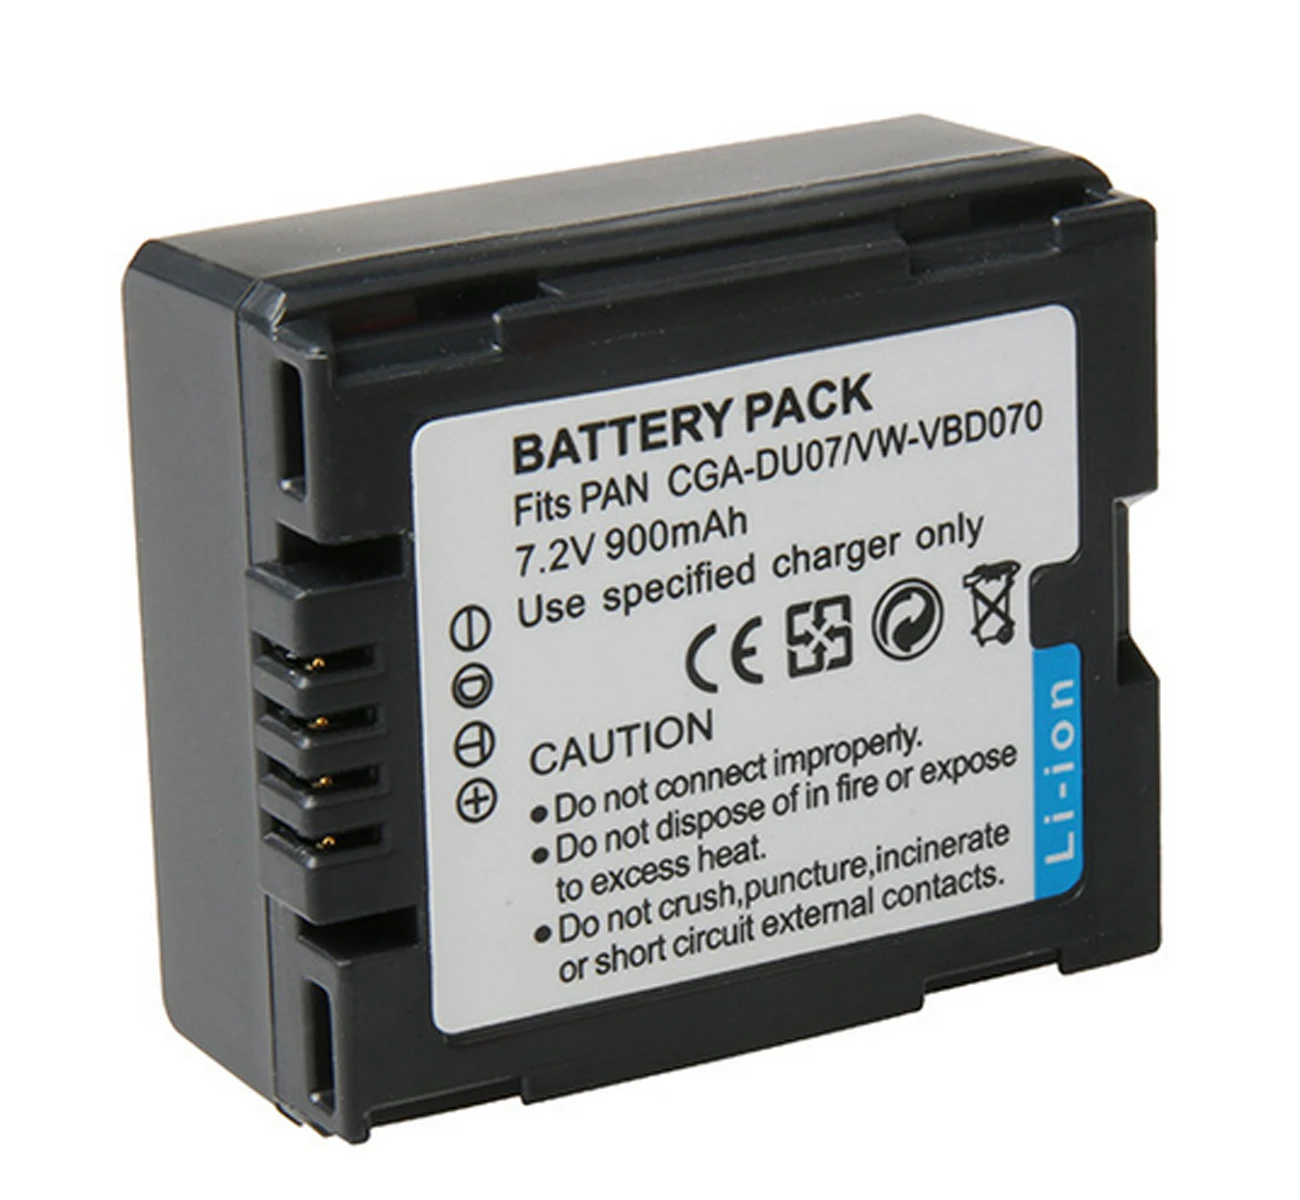 Аккумуляторная батарея для Panasonic NV-GS21, NV-GS22, NV-GS25, NV-GS27, NV-GS30, NV-GS33, NV-GS35, NV-GS37, NV-GS400, NV-GS500, видеокамеры